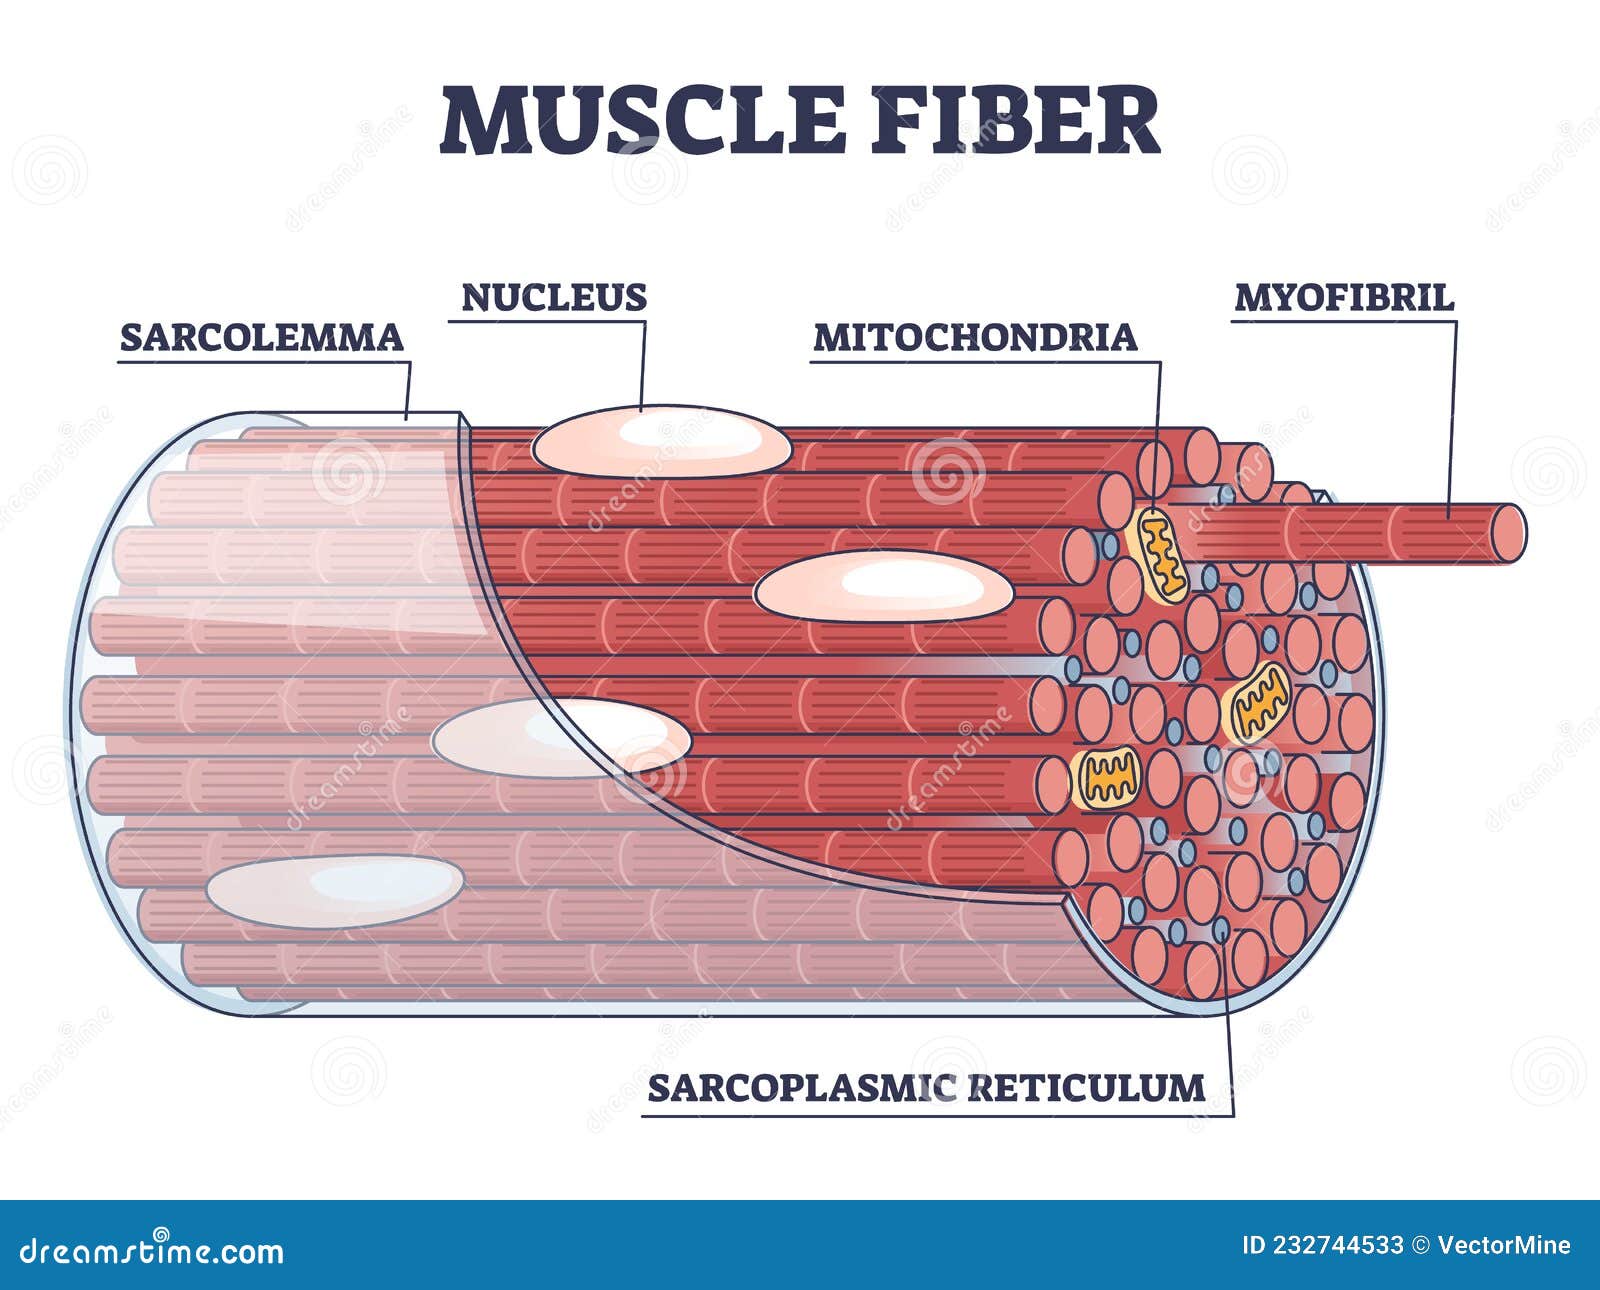 Muscle Fiber Diagram Labeled 